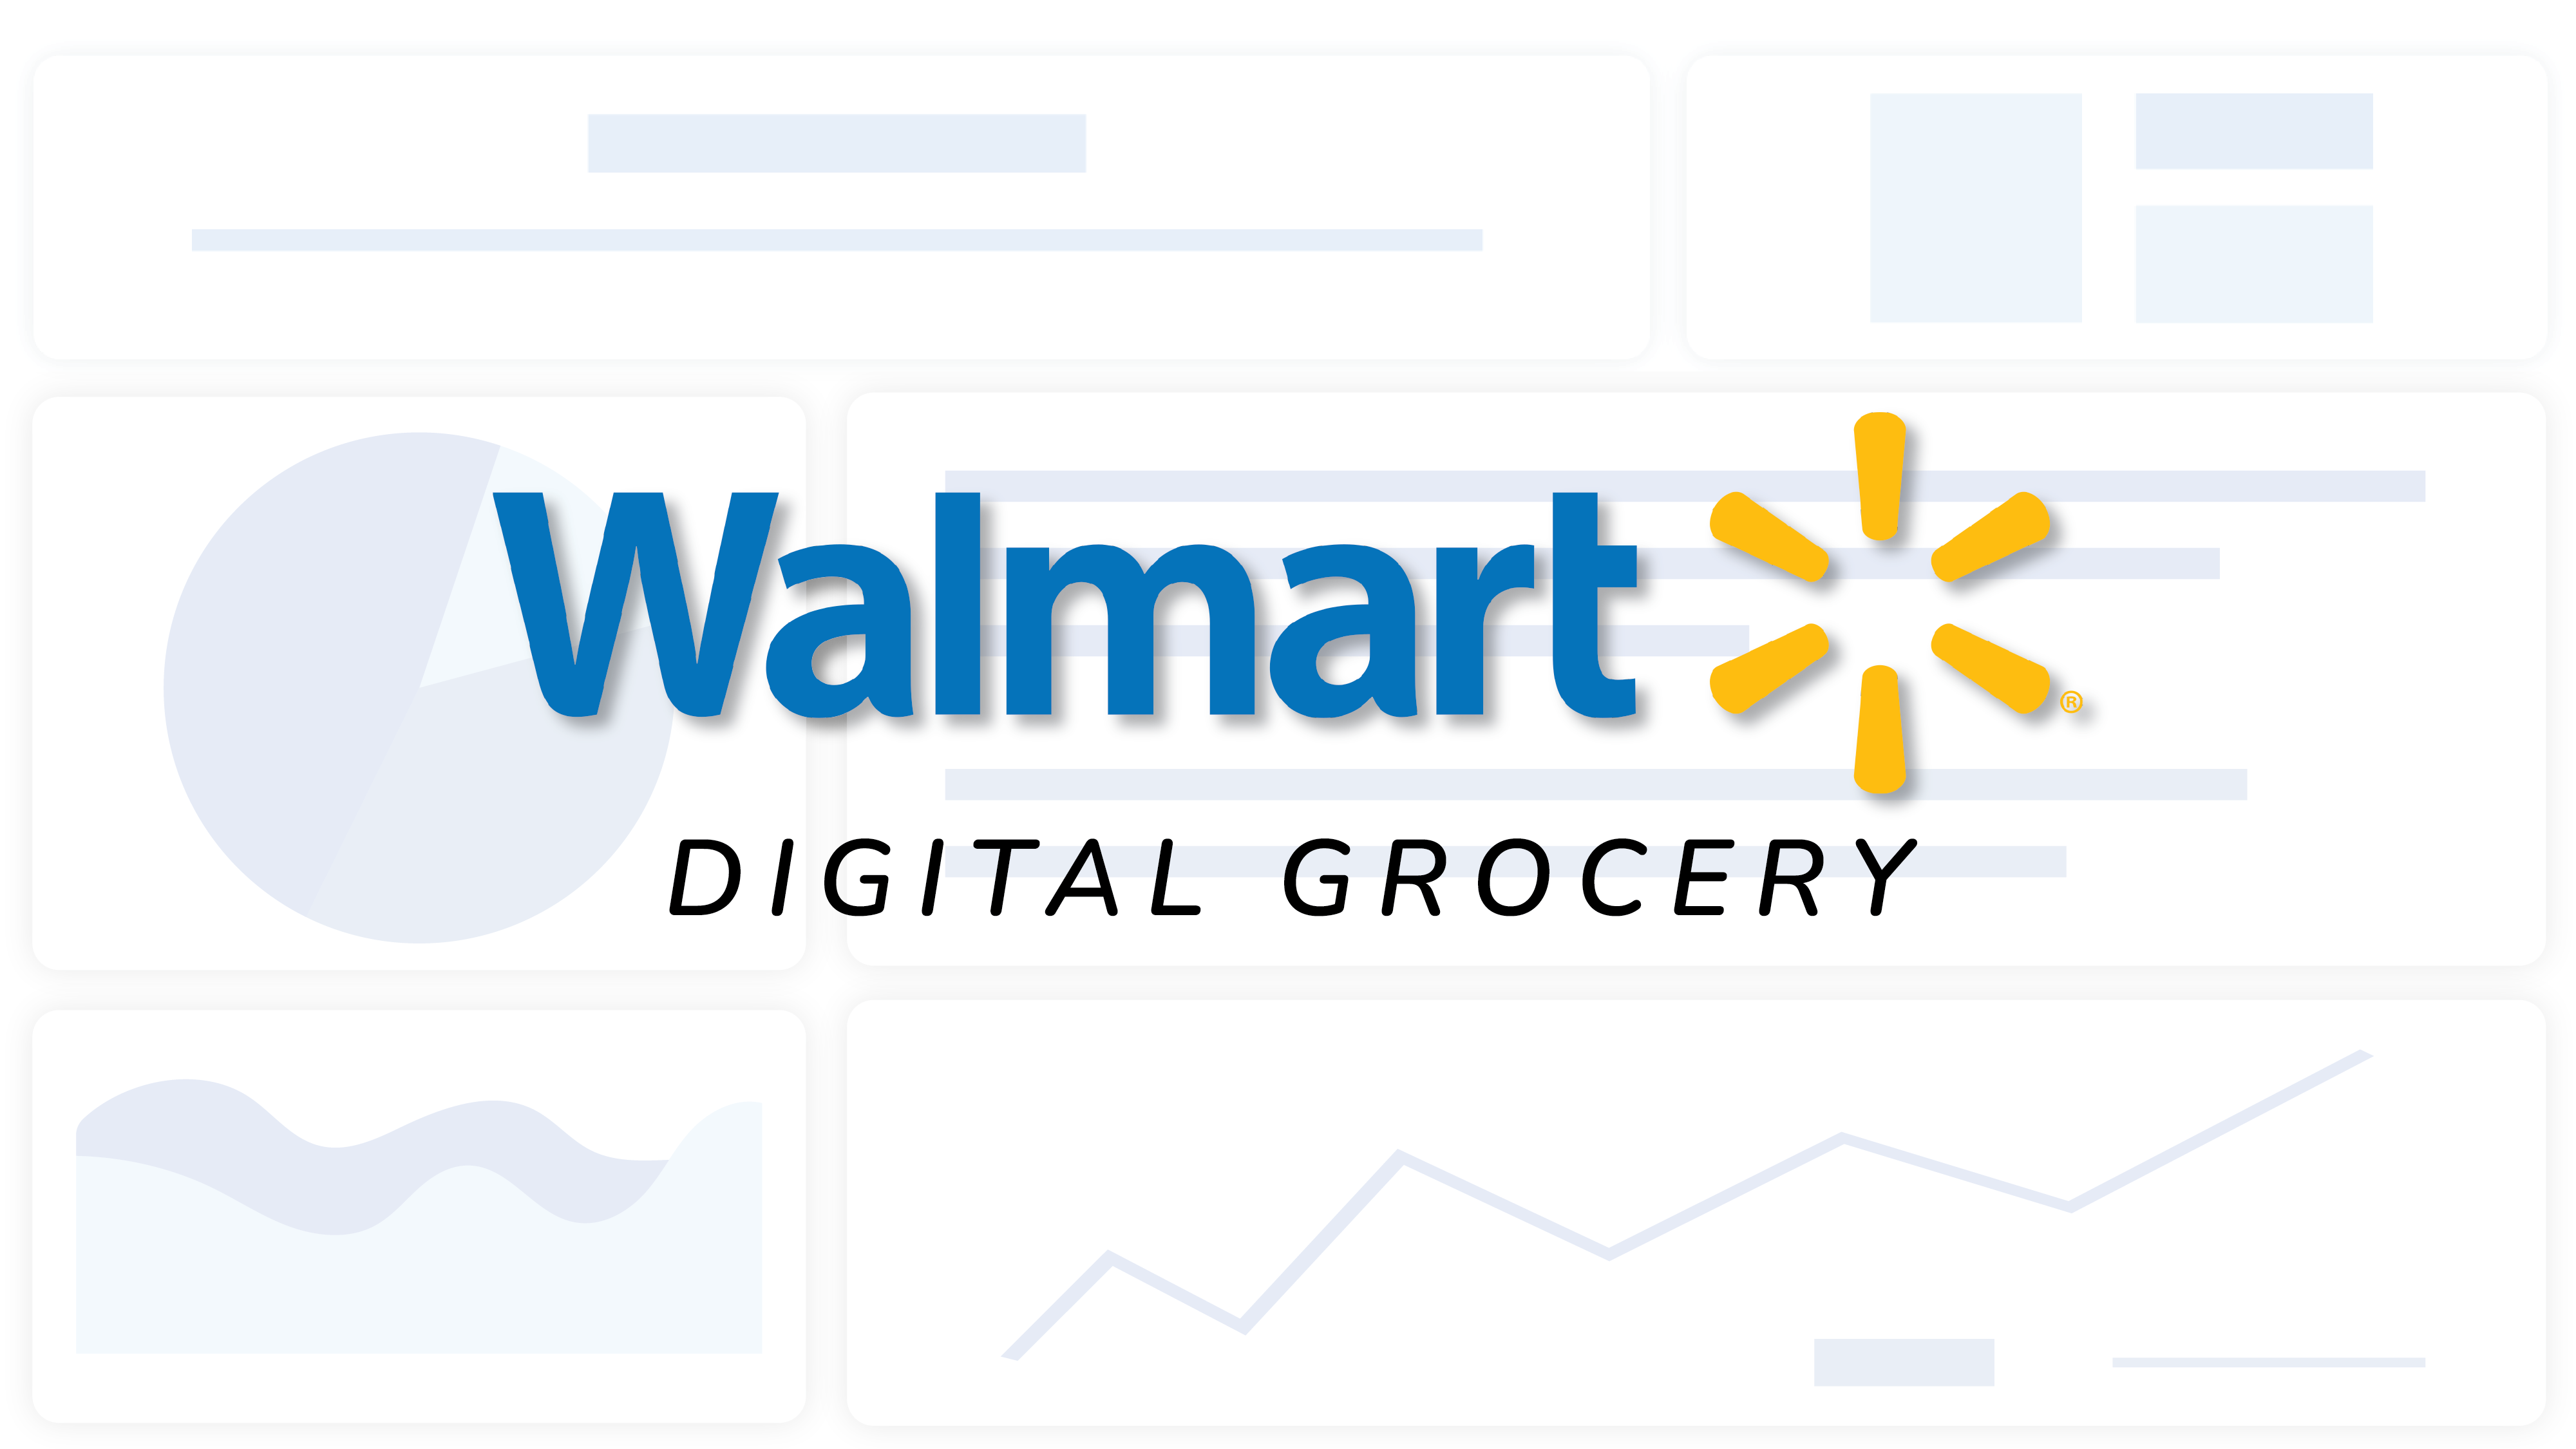 Walmart digital grocery reports